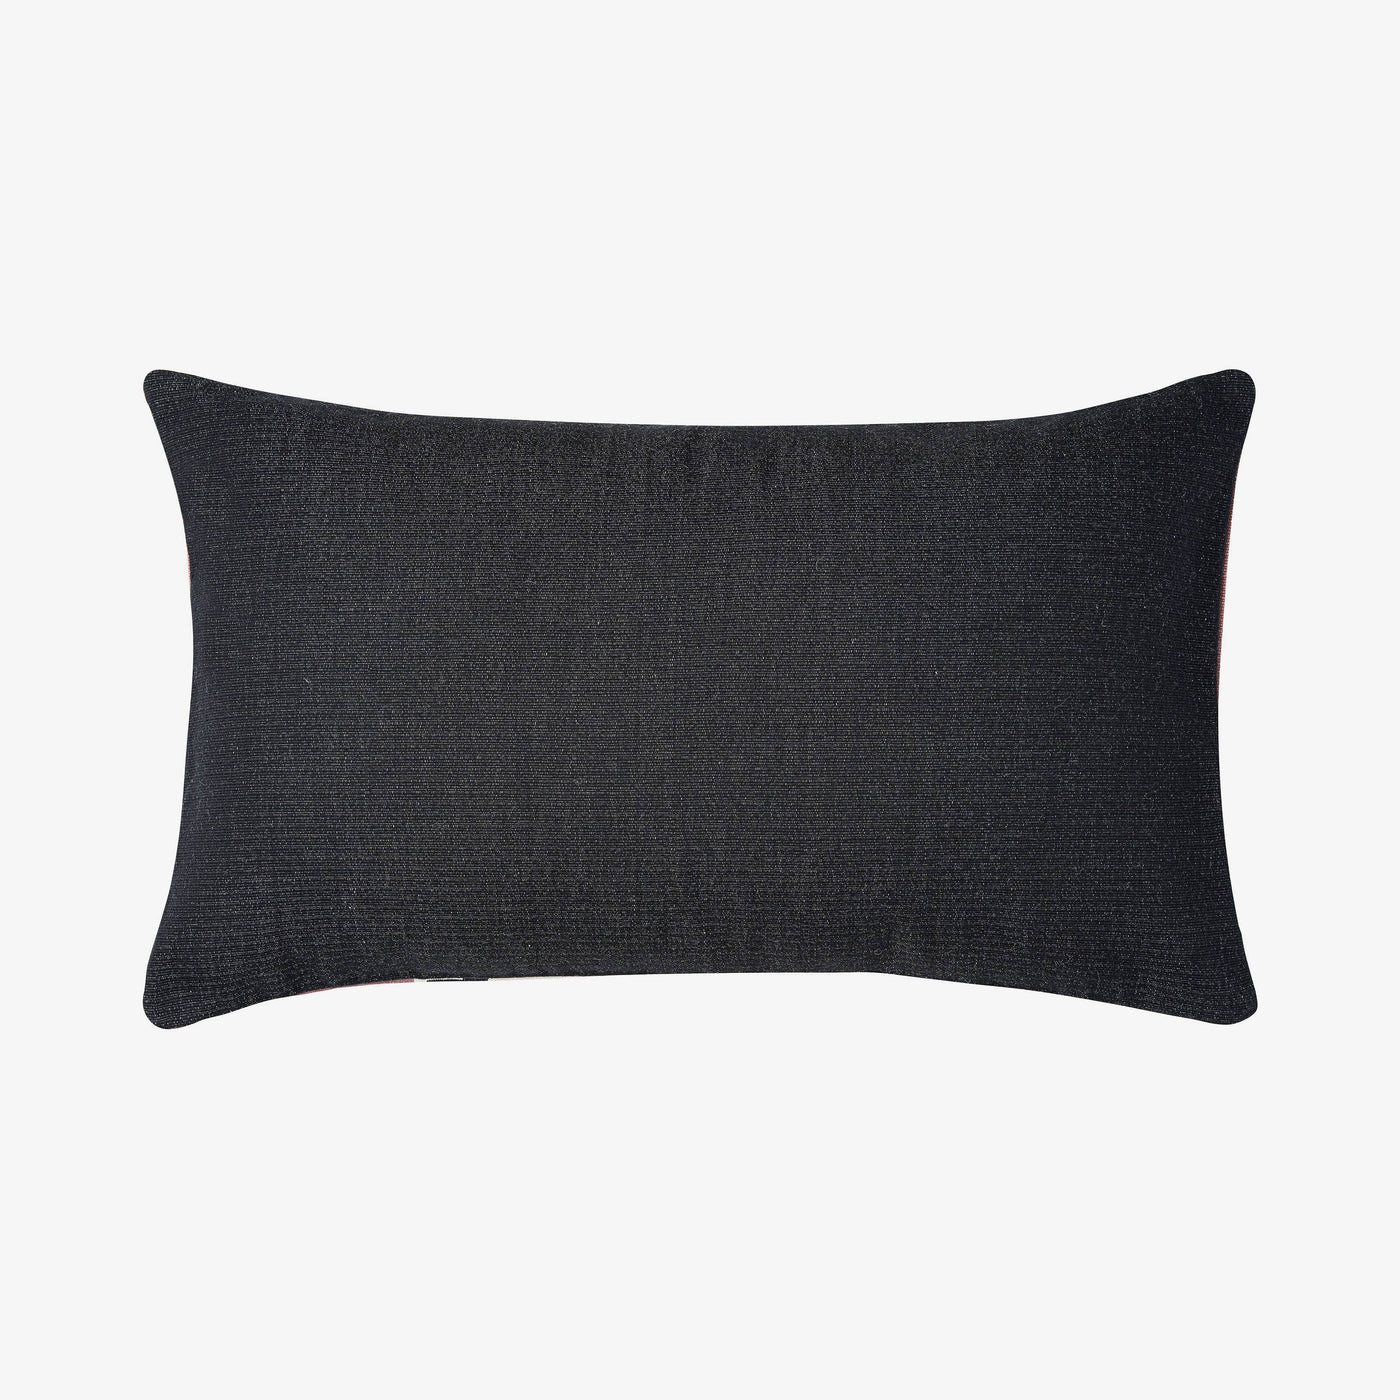 Dumnoni Cushion Cover, Plum - Beige, 35x55 cm Cushion Covers sazy.com